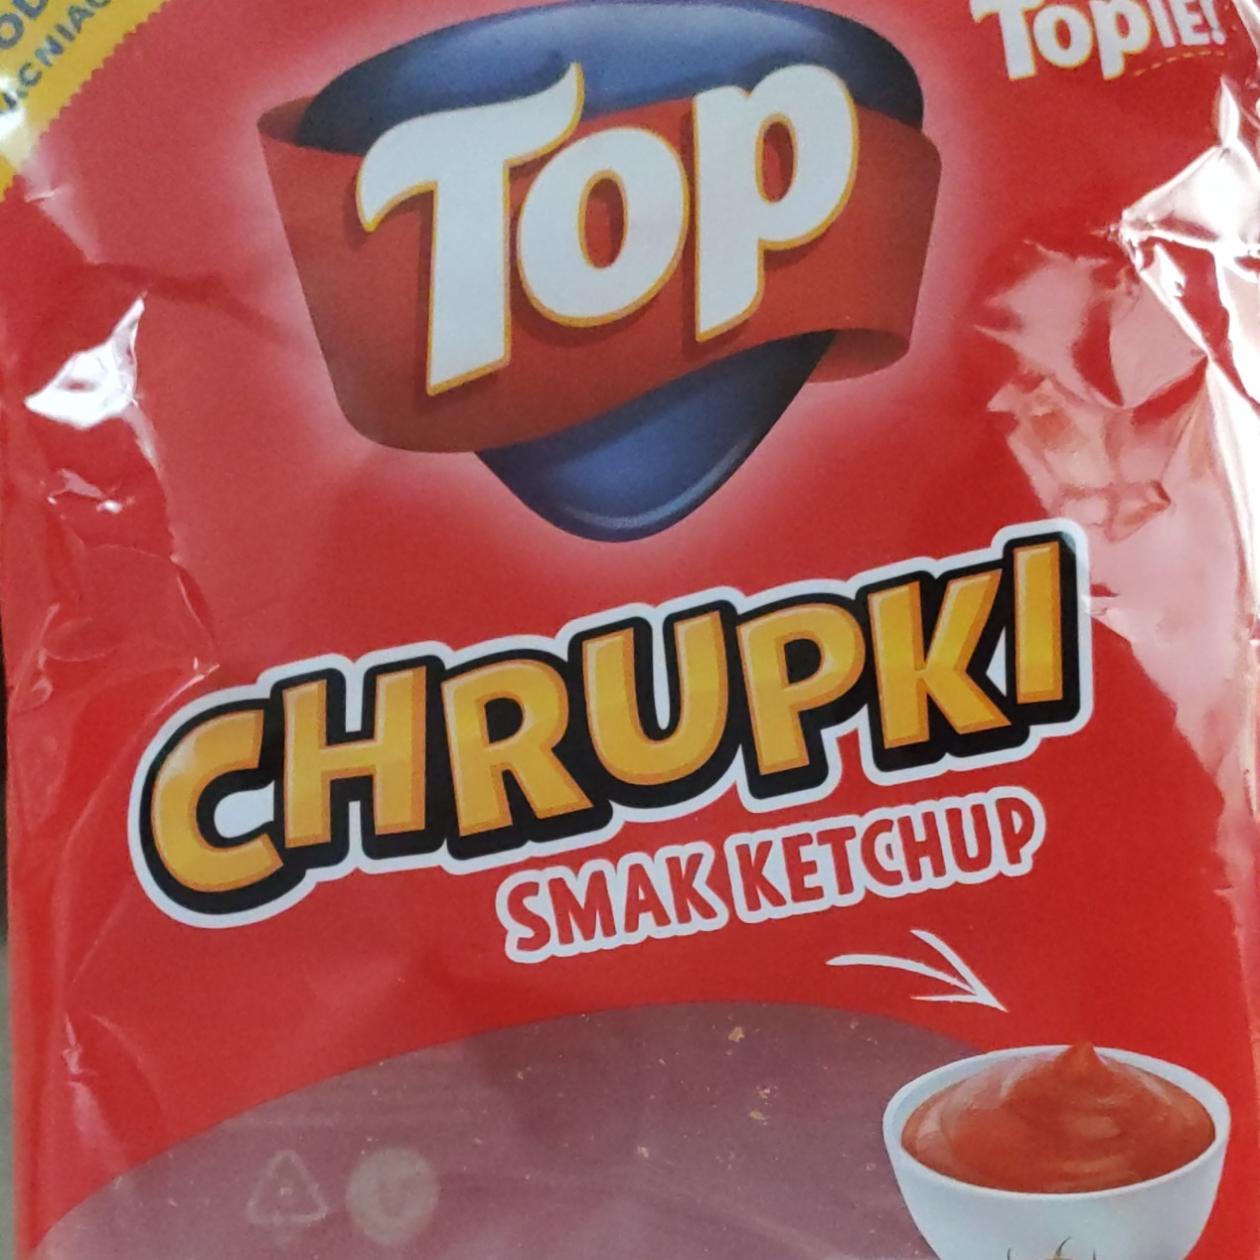 Zdjęcia - Chrupki smak ketchup TOP